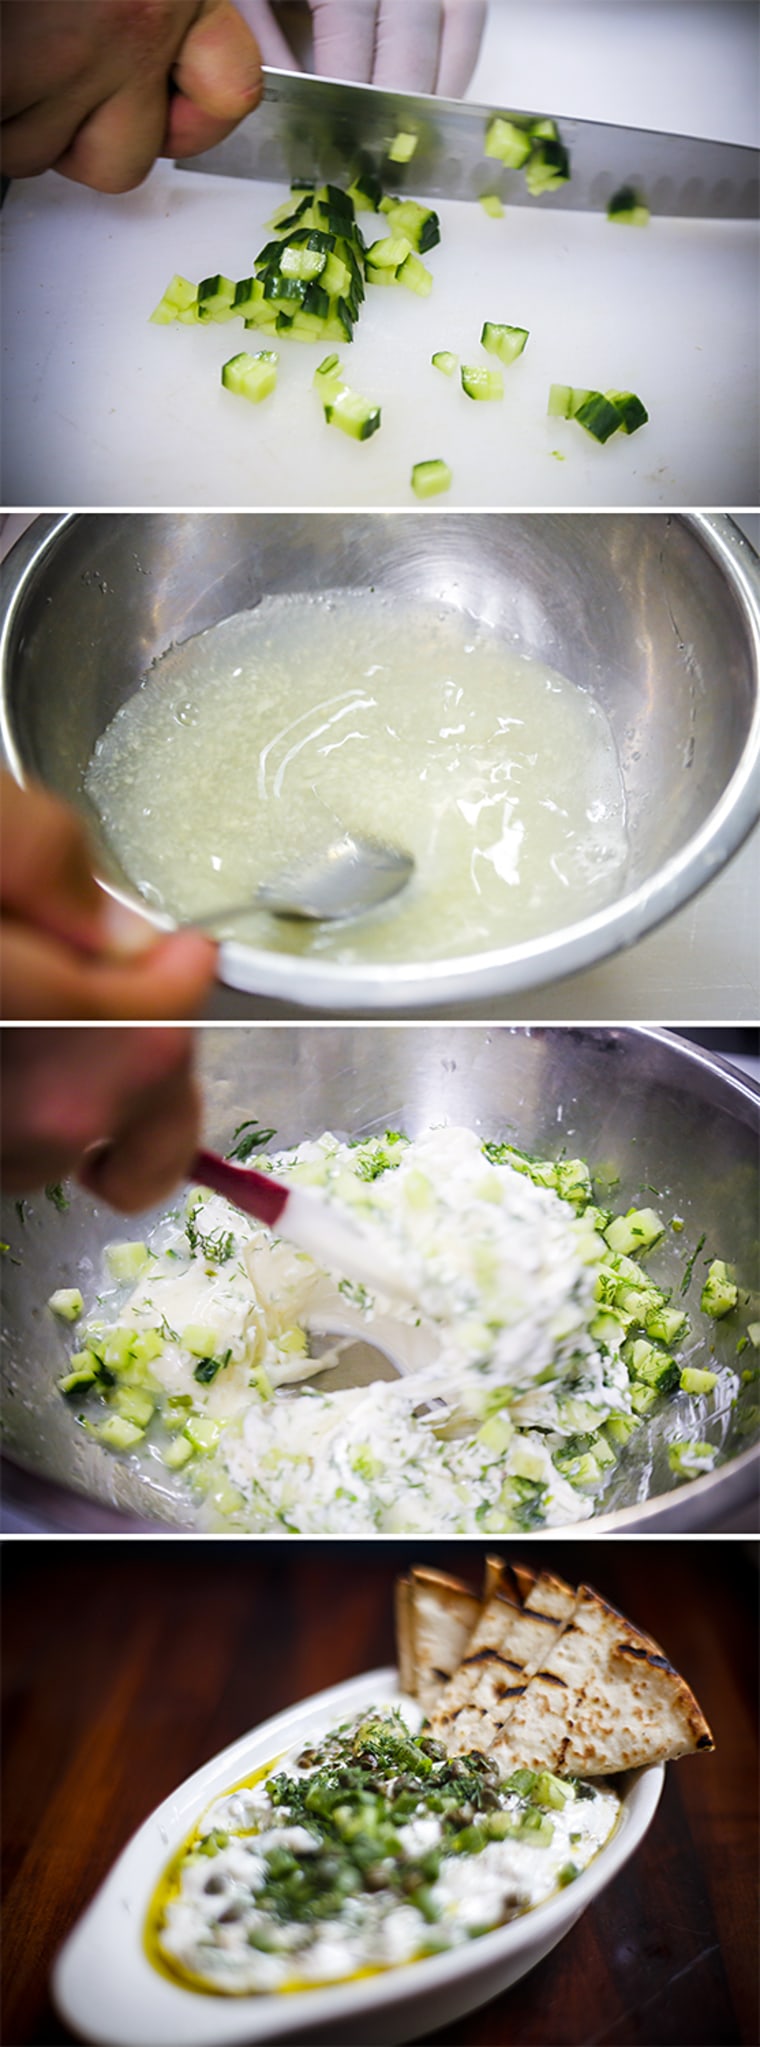 Cucumber-garlic tzatziki recipe by chef Michael Psilakis